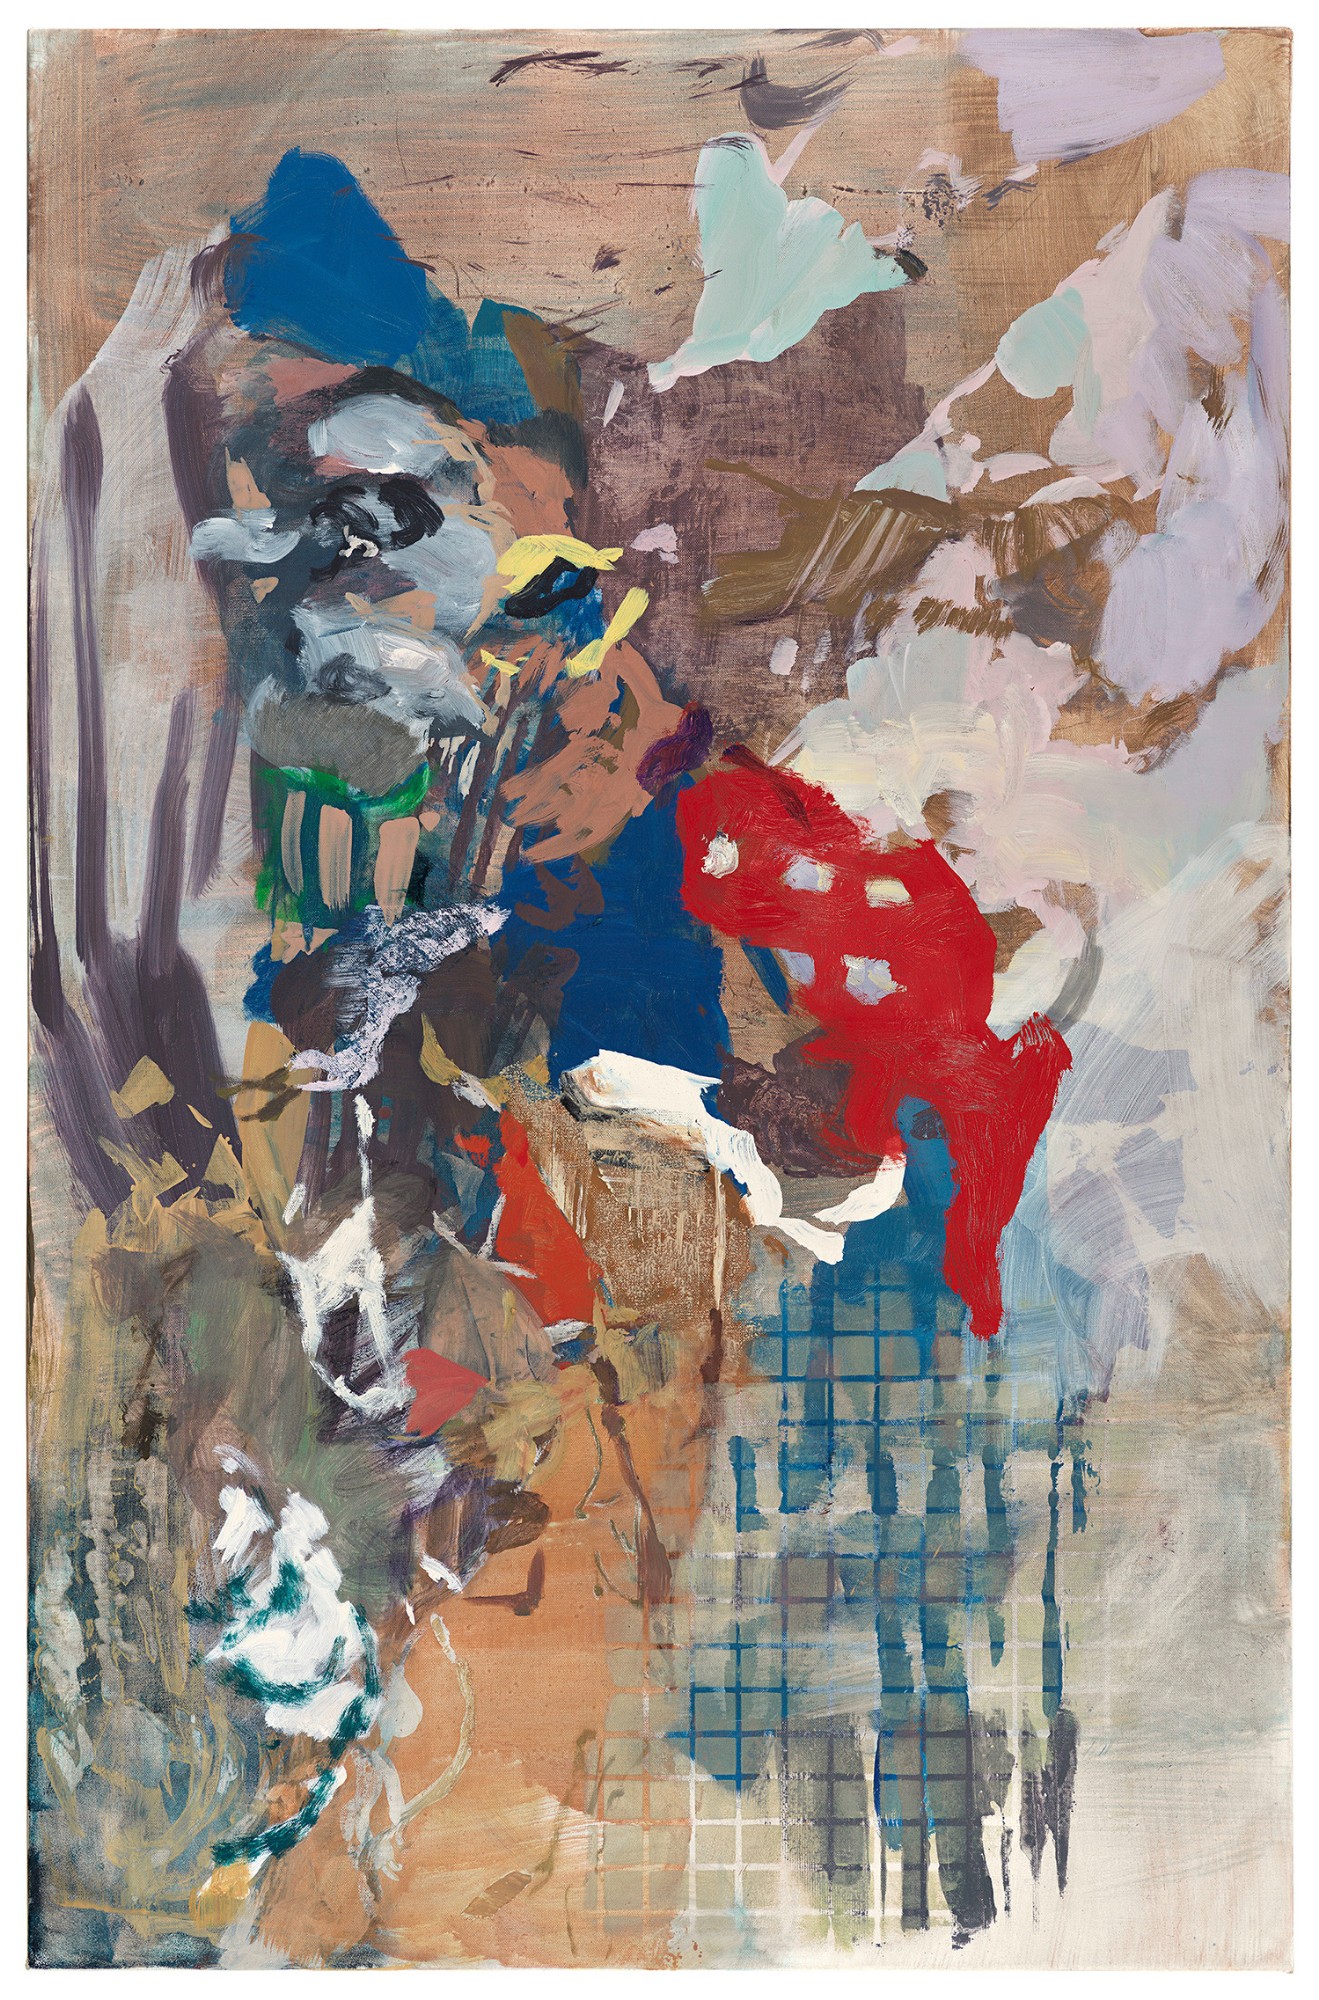 Maki Na Kamura, LD LXXXII, 2021, oil, egg tempera on canvas, 170 x 110 cm